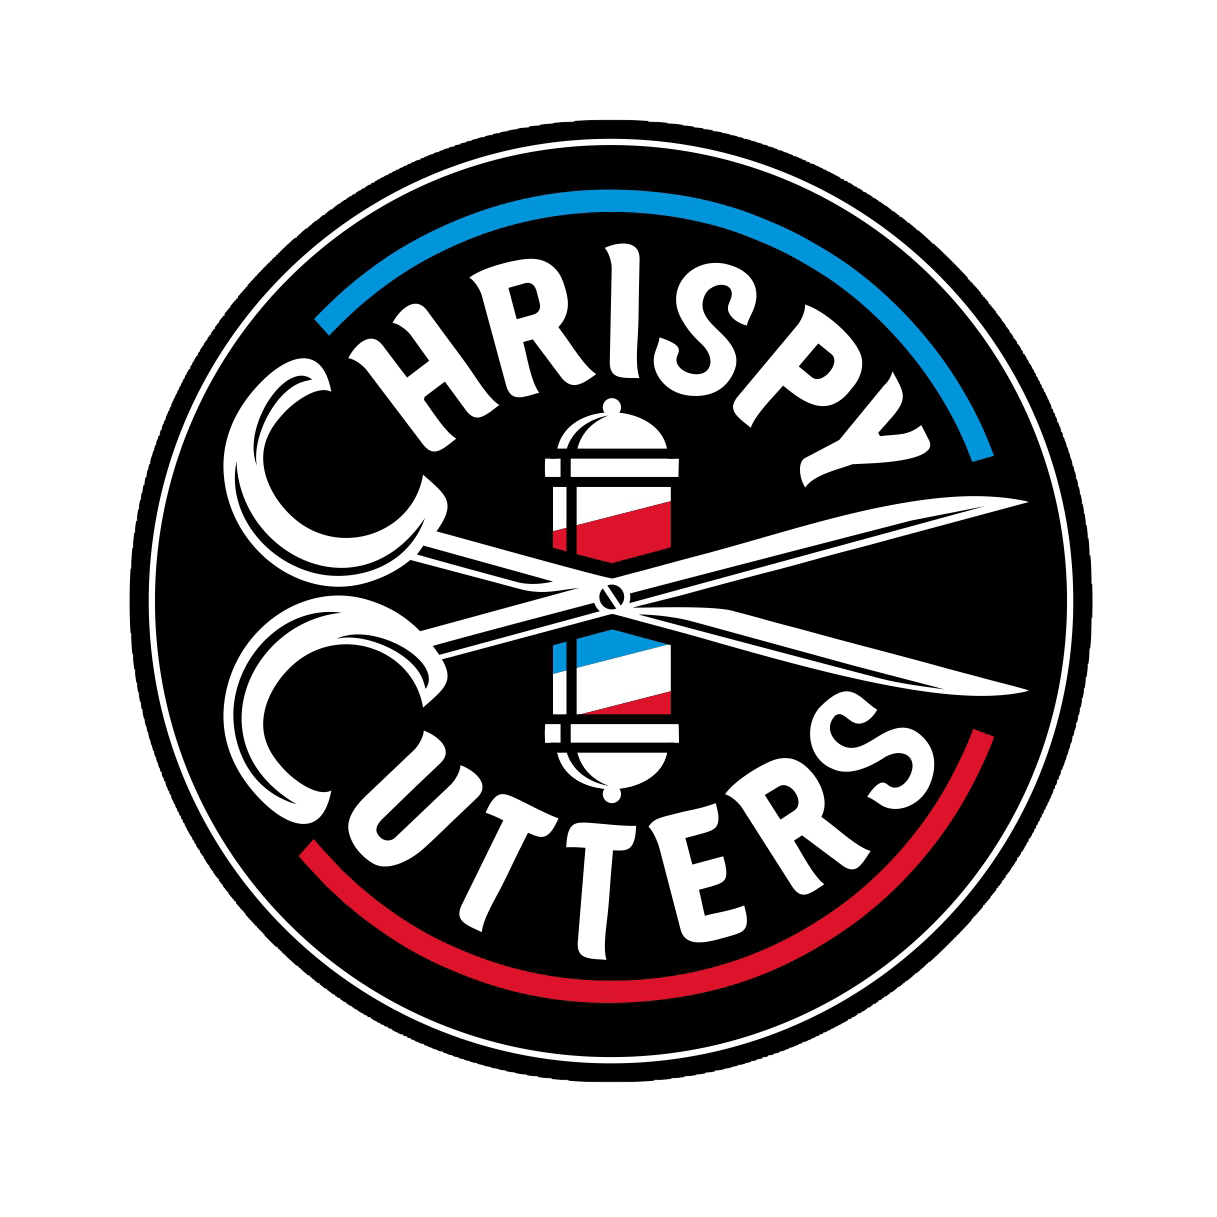 Chrispy Cutters